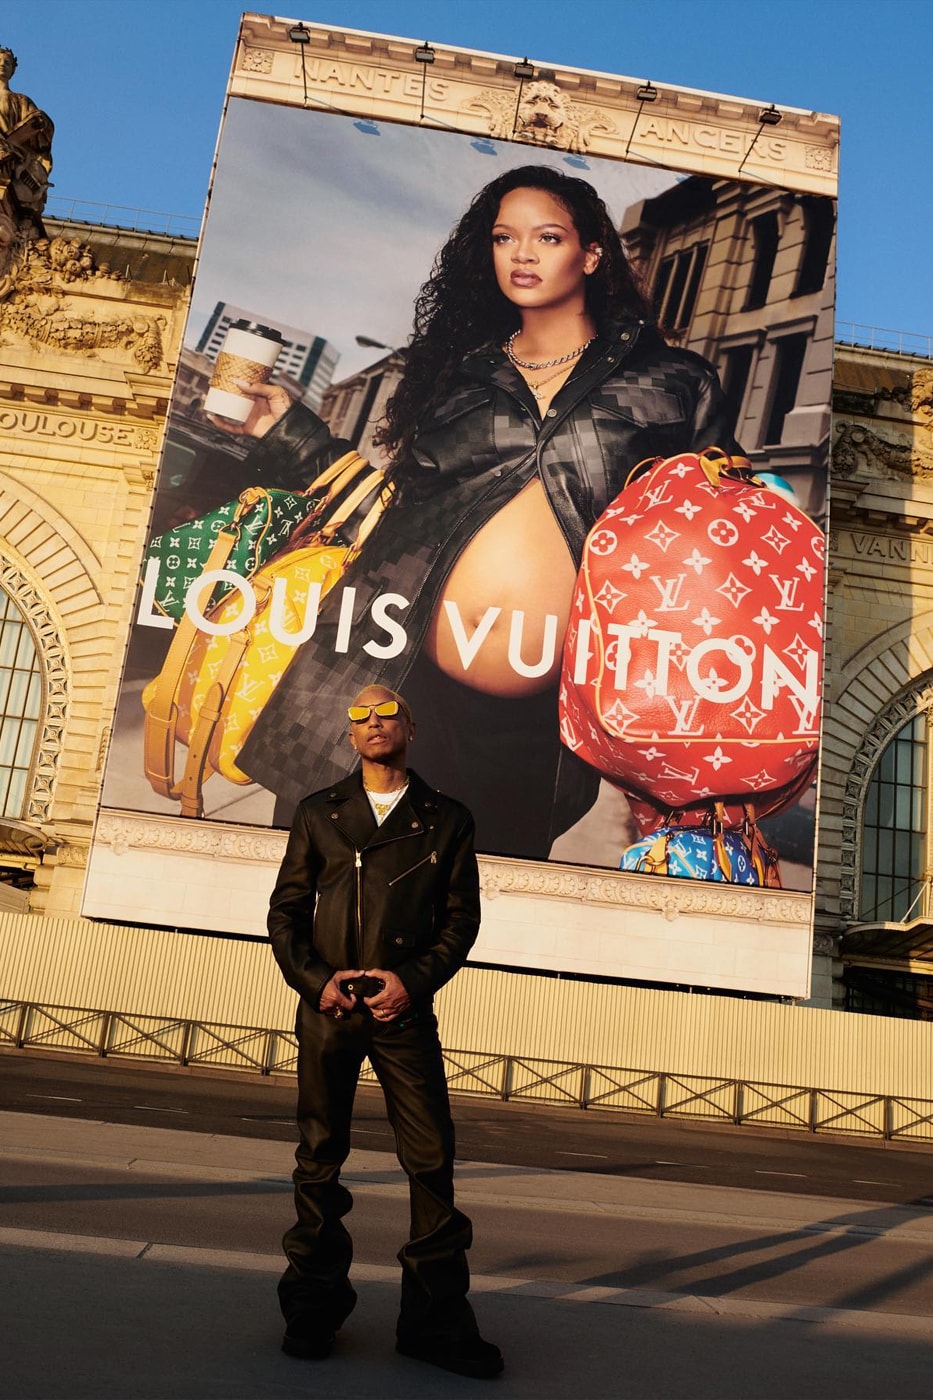 Louis Vuitton launches Imagination - the quintessential